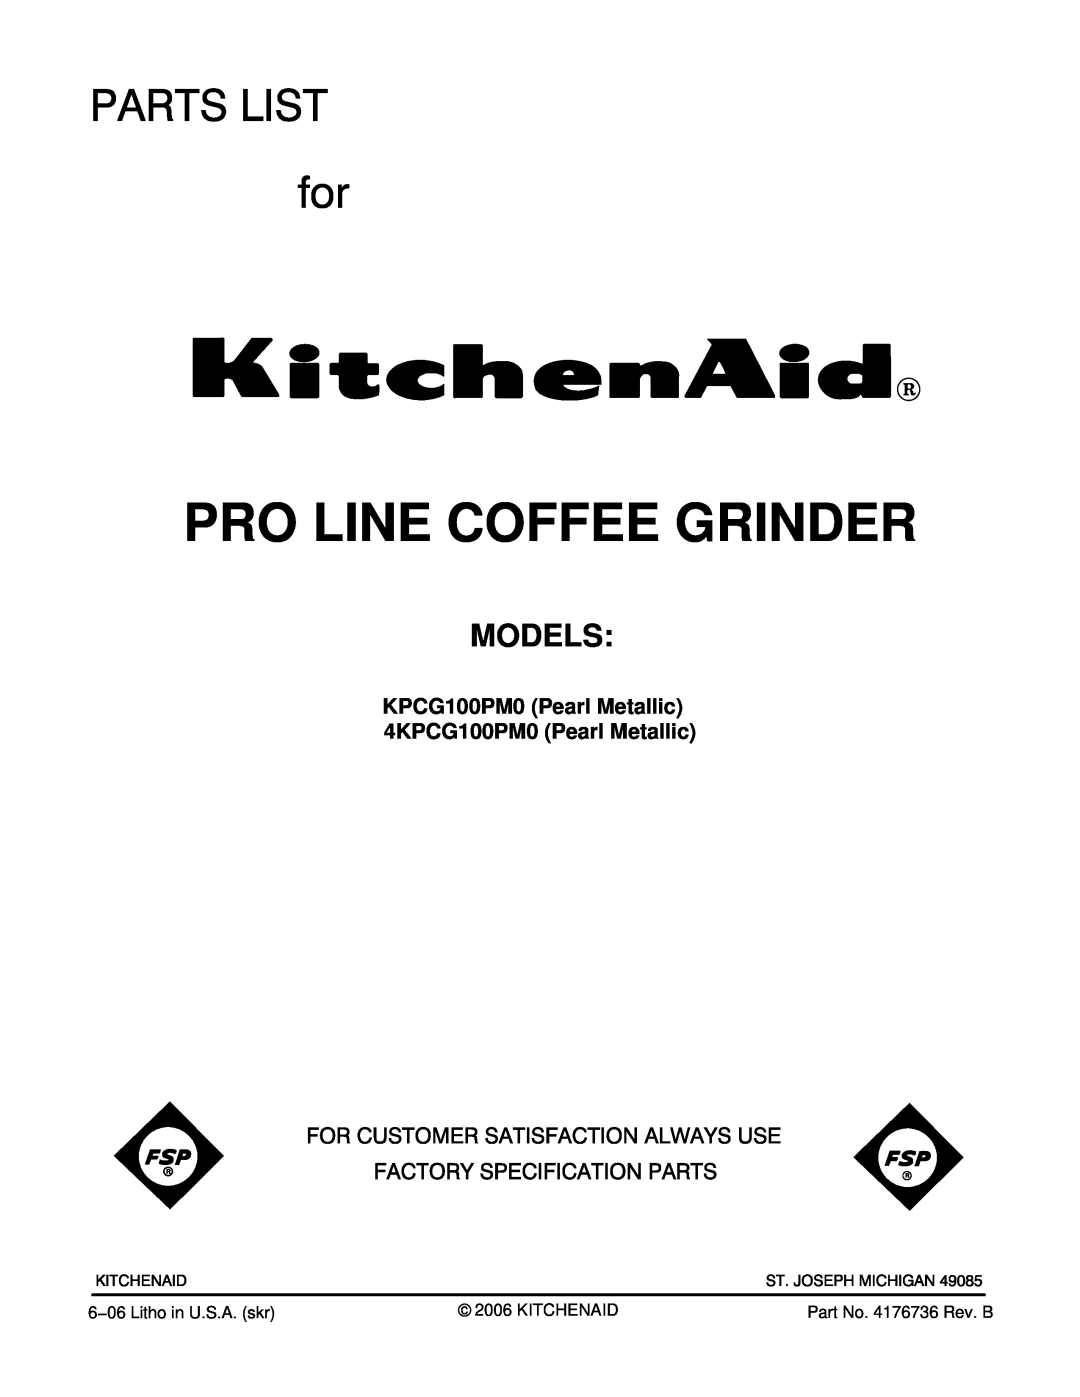 KitchenAid manual Models, KPCG100PM0 Pearl Metallic 4KPCG100PM0 Pearl Metallic, Pro Line Coffee Grinder 